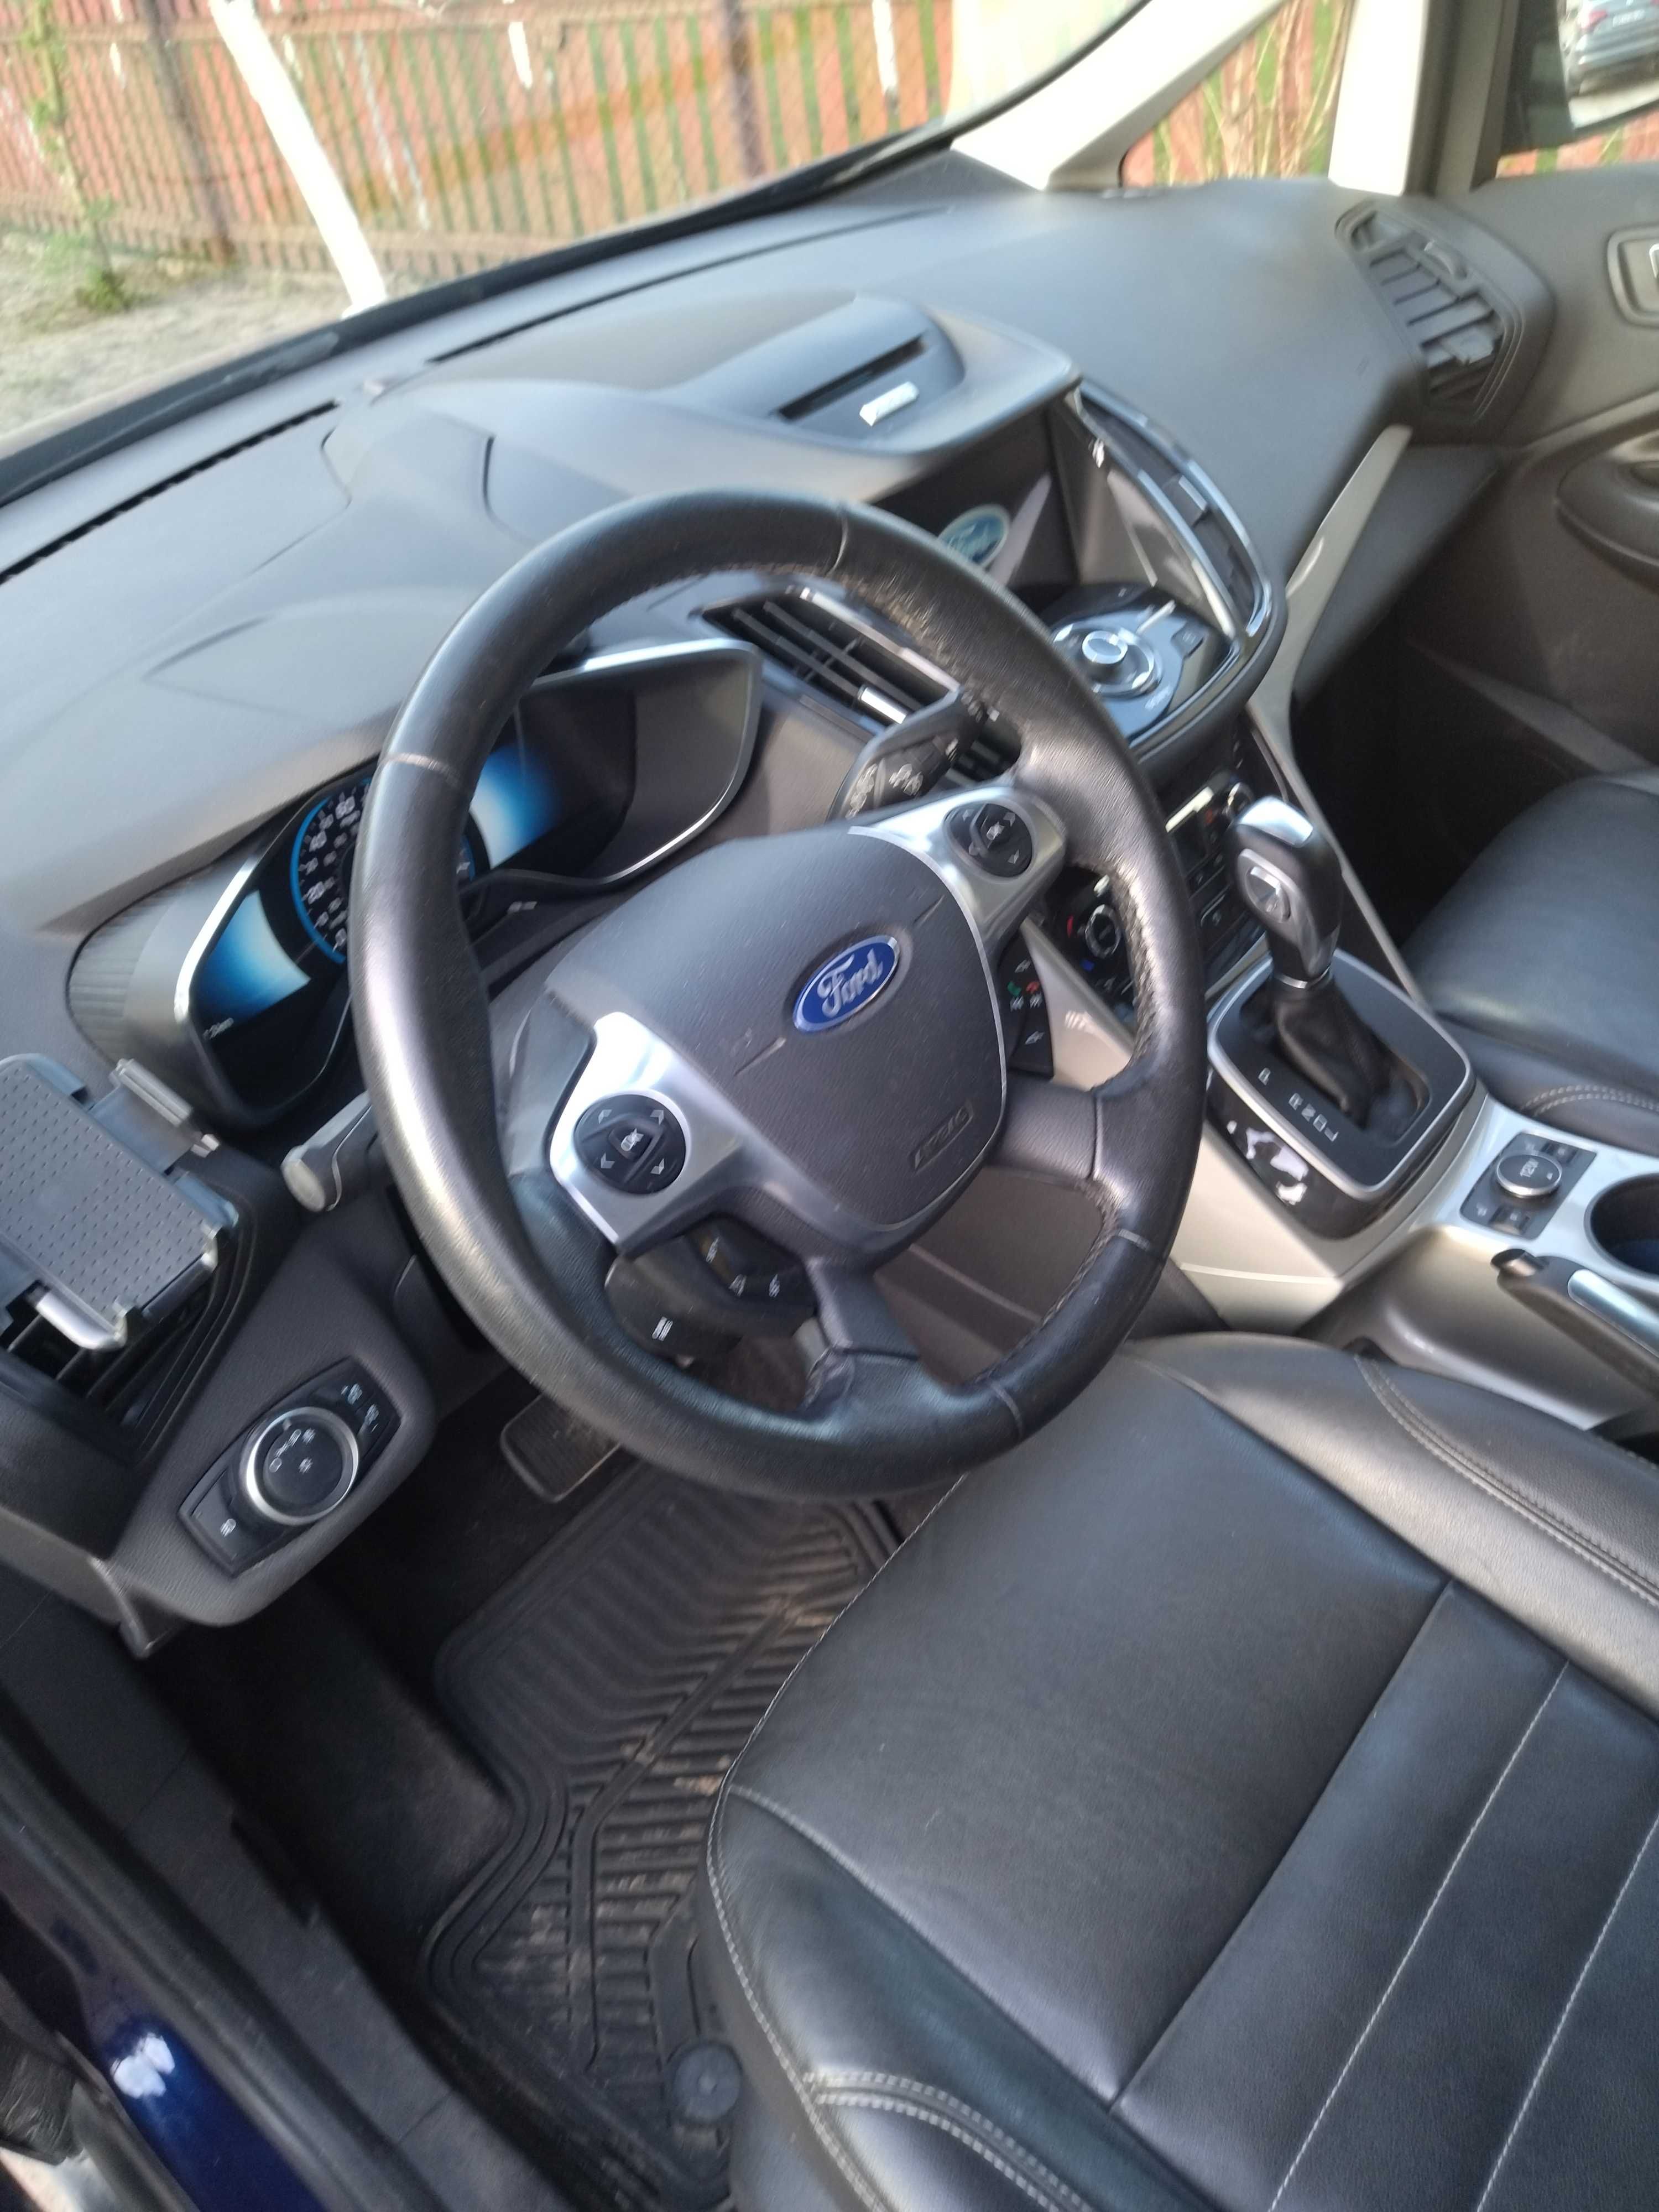 Ford C-Max 2016
Гібрид (PHEV), 2 л.